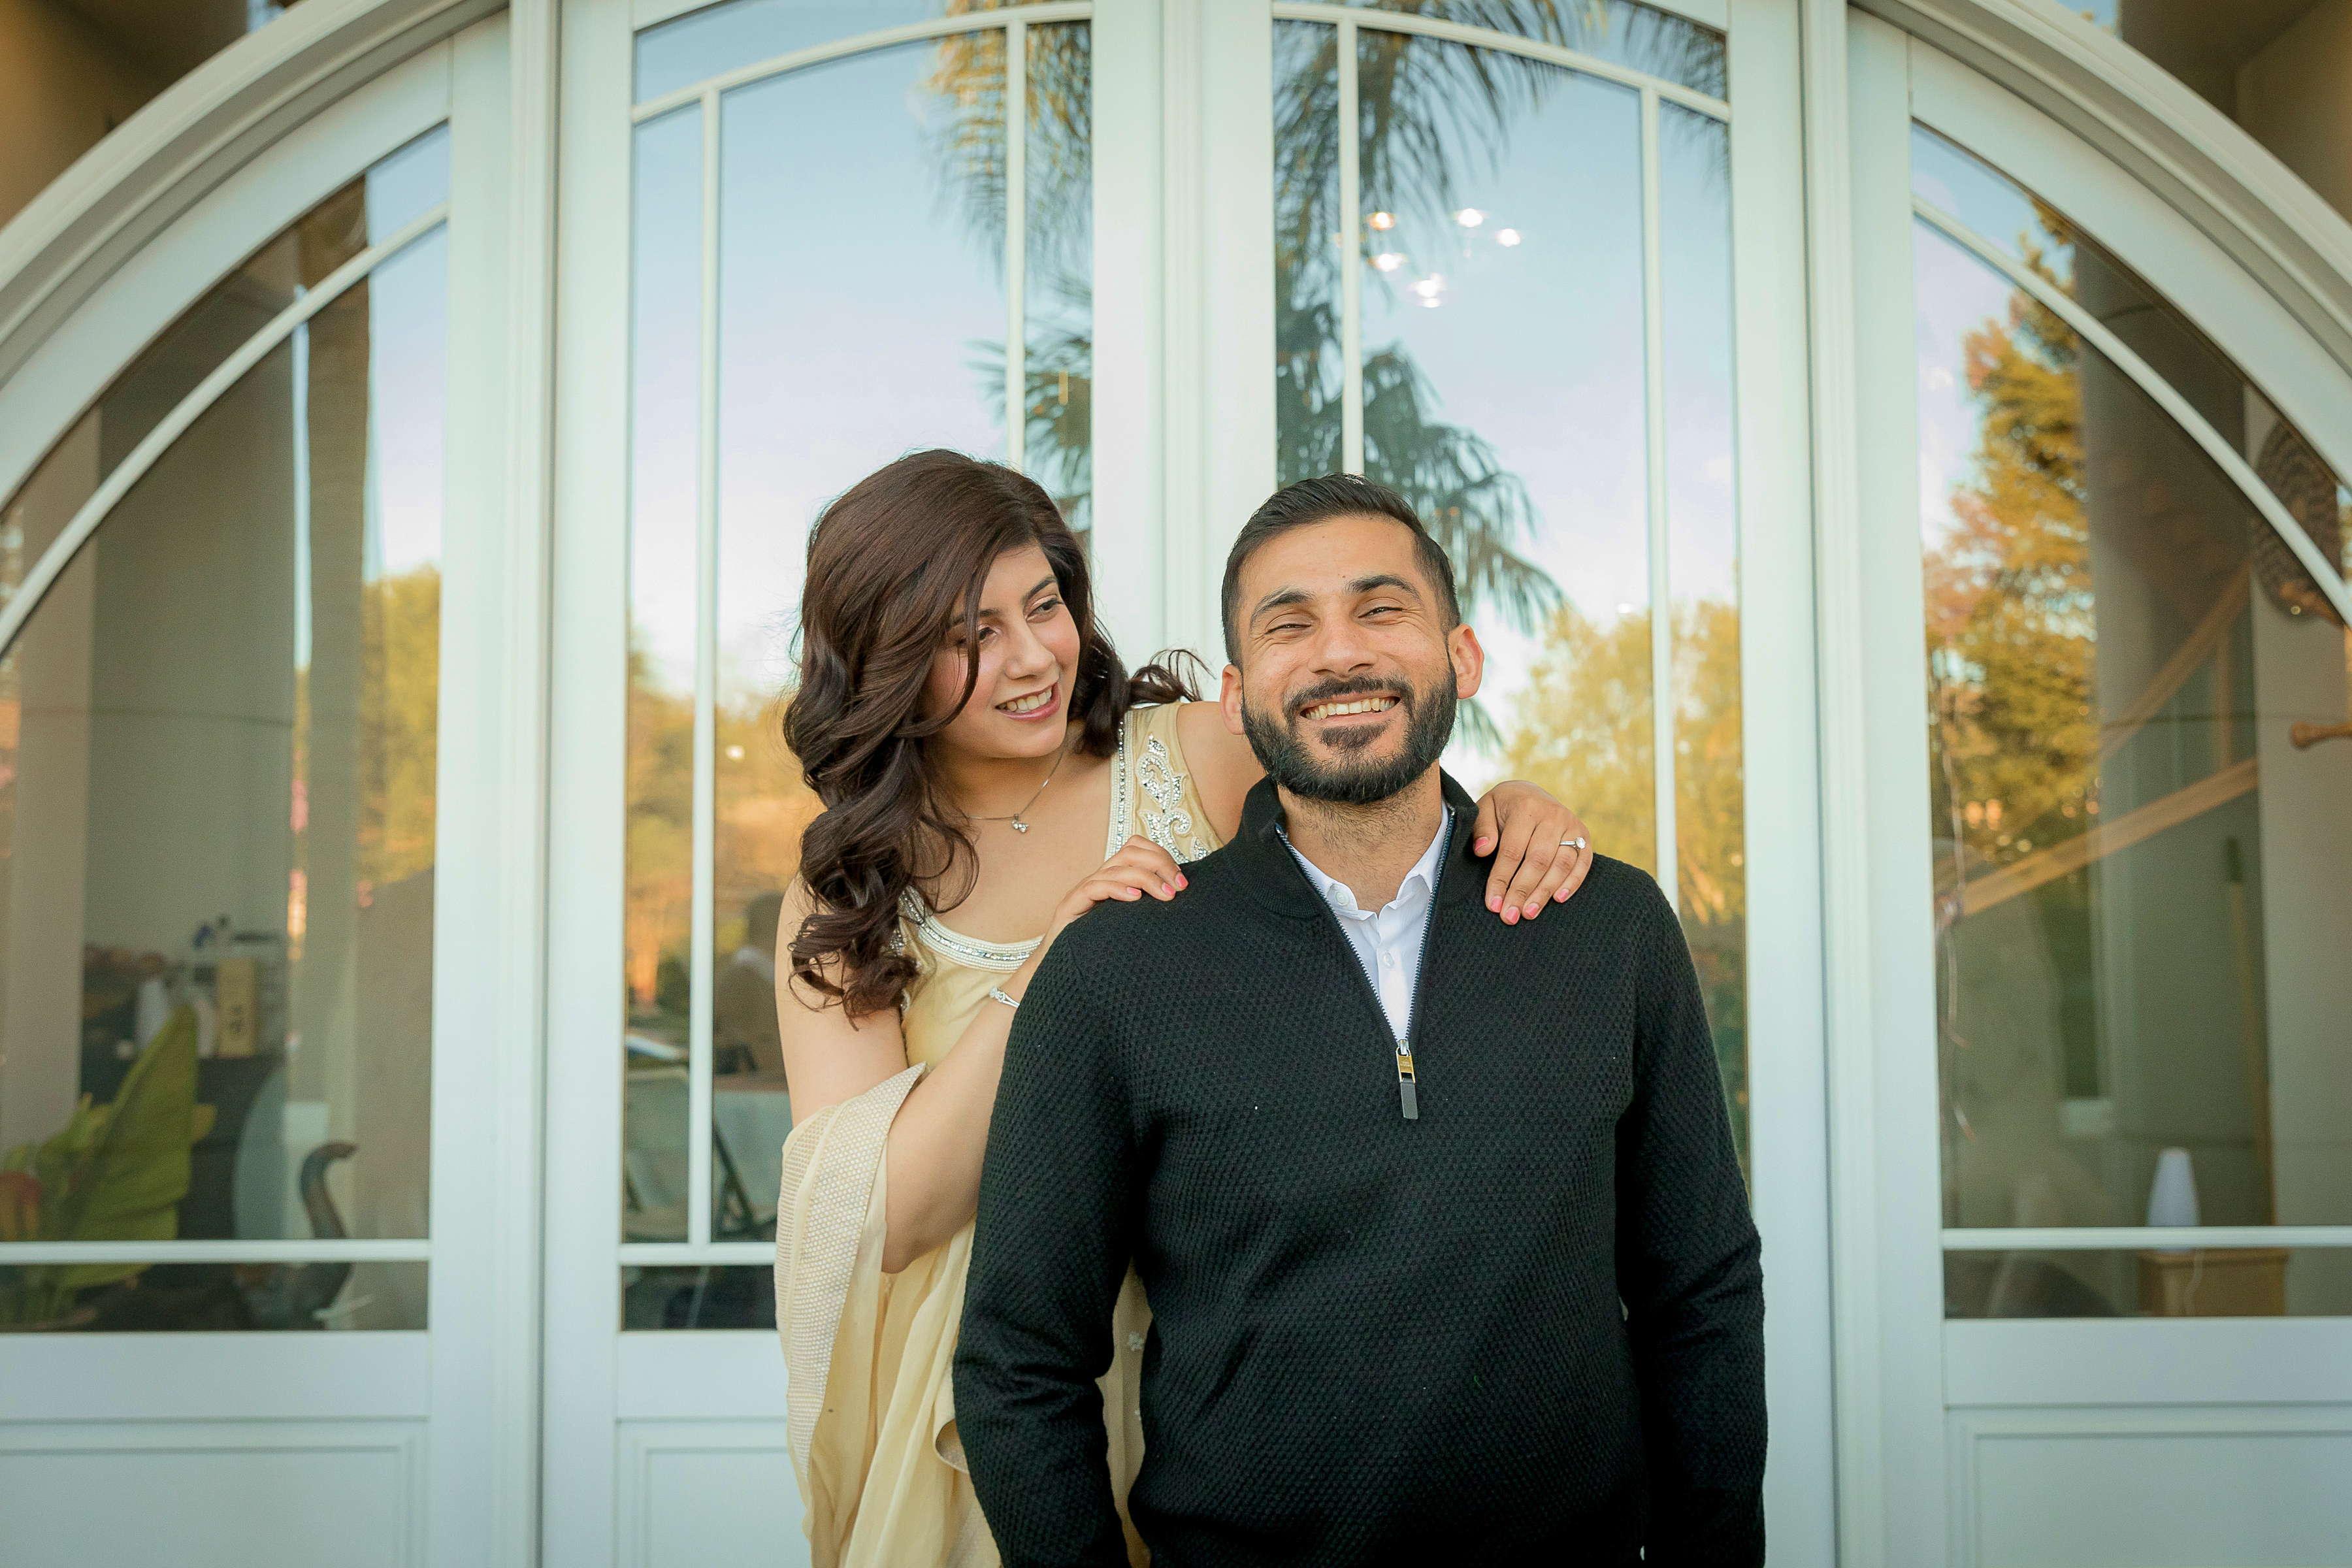 The Wedding Website of Khadija Lalani and Ali Shawn Sherali